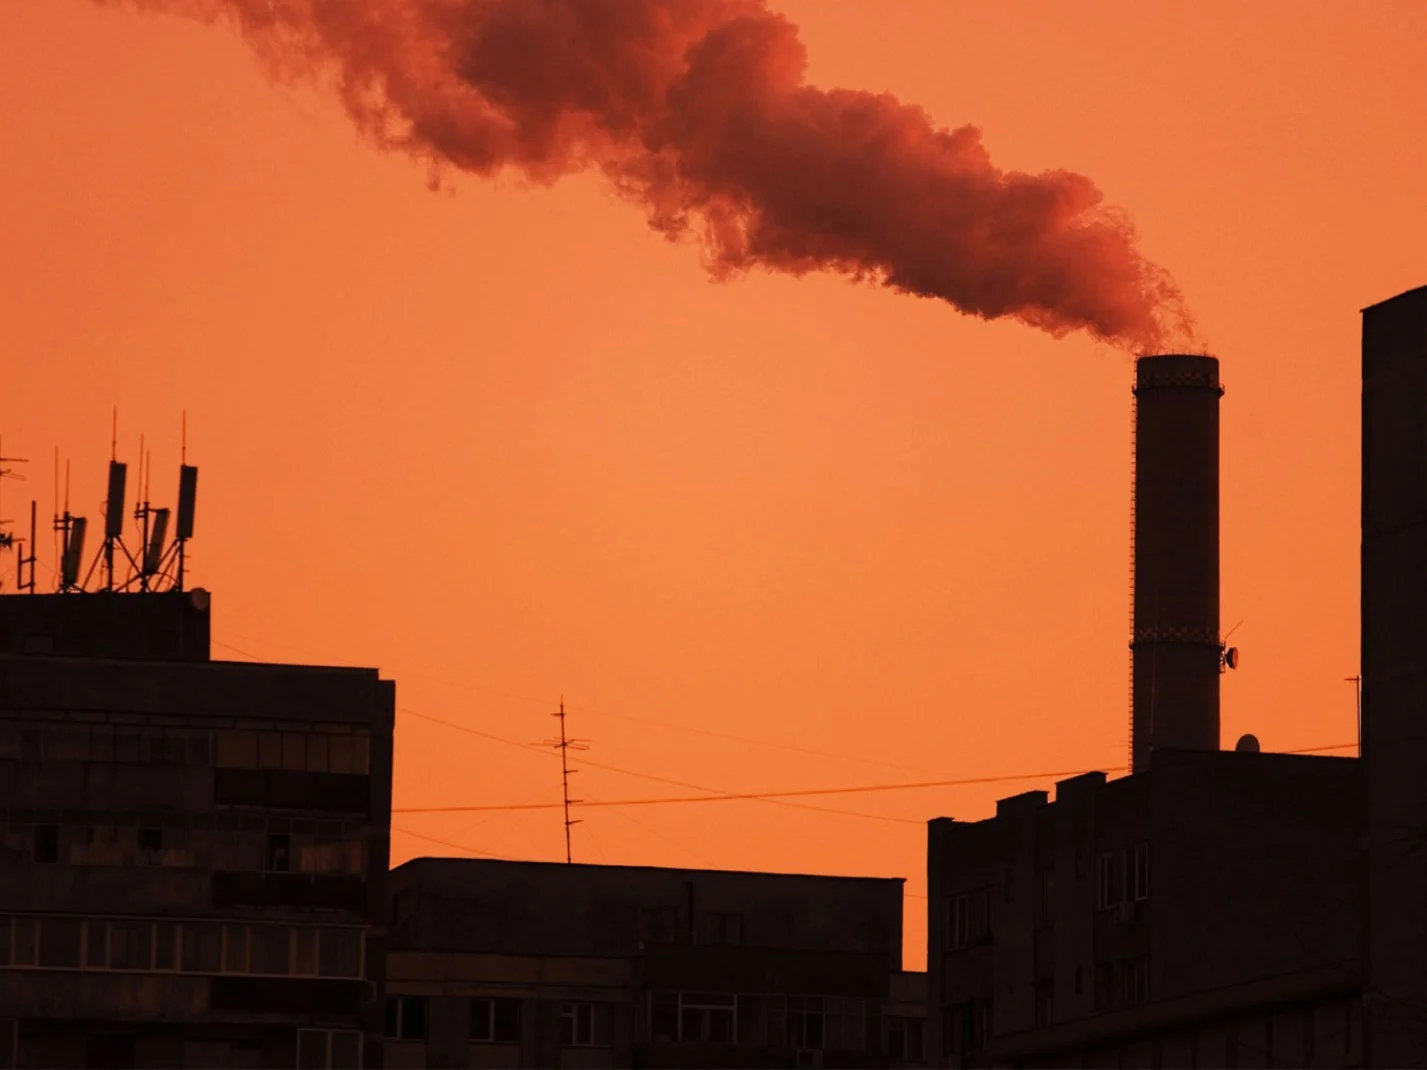 Industrial chimney polluting city